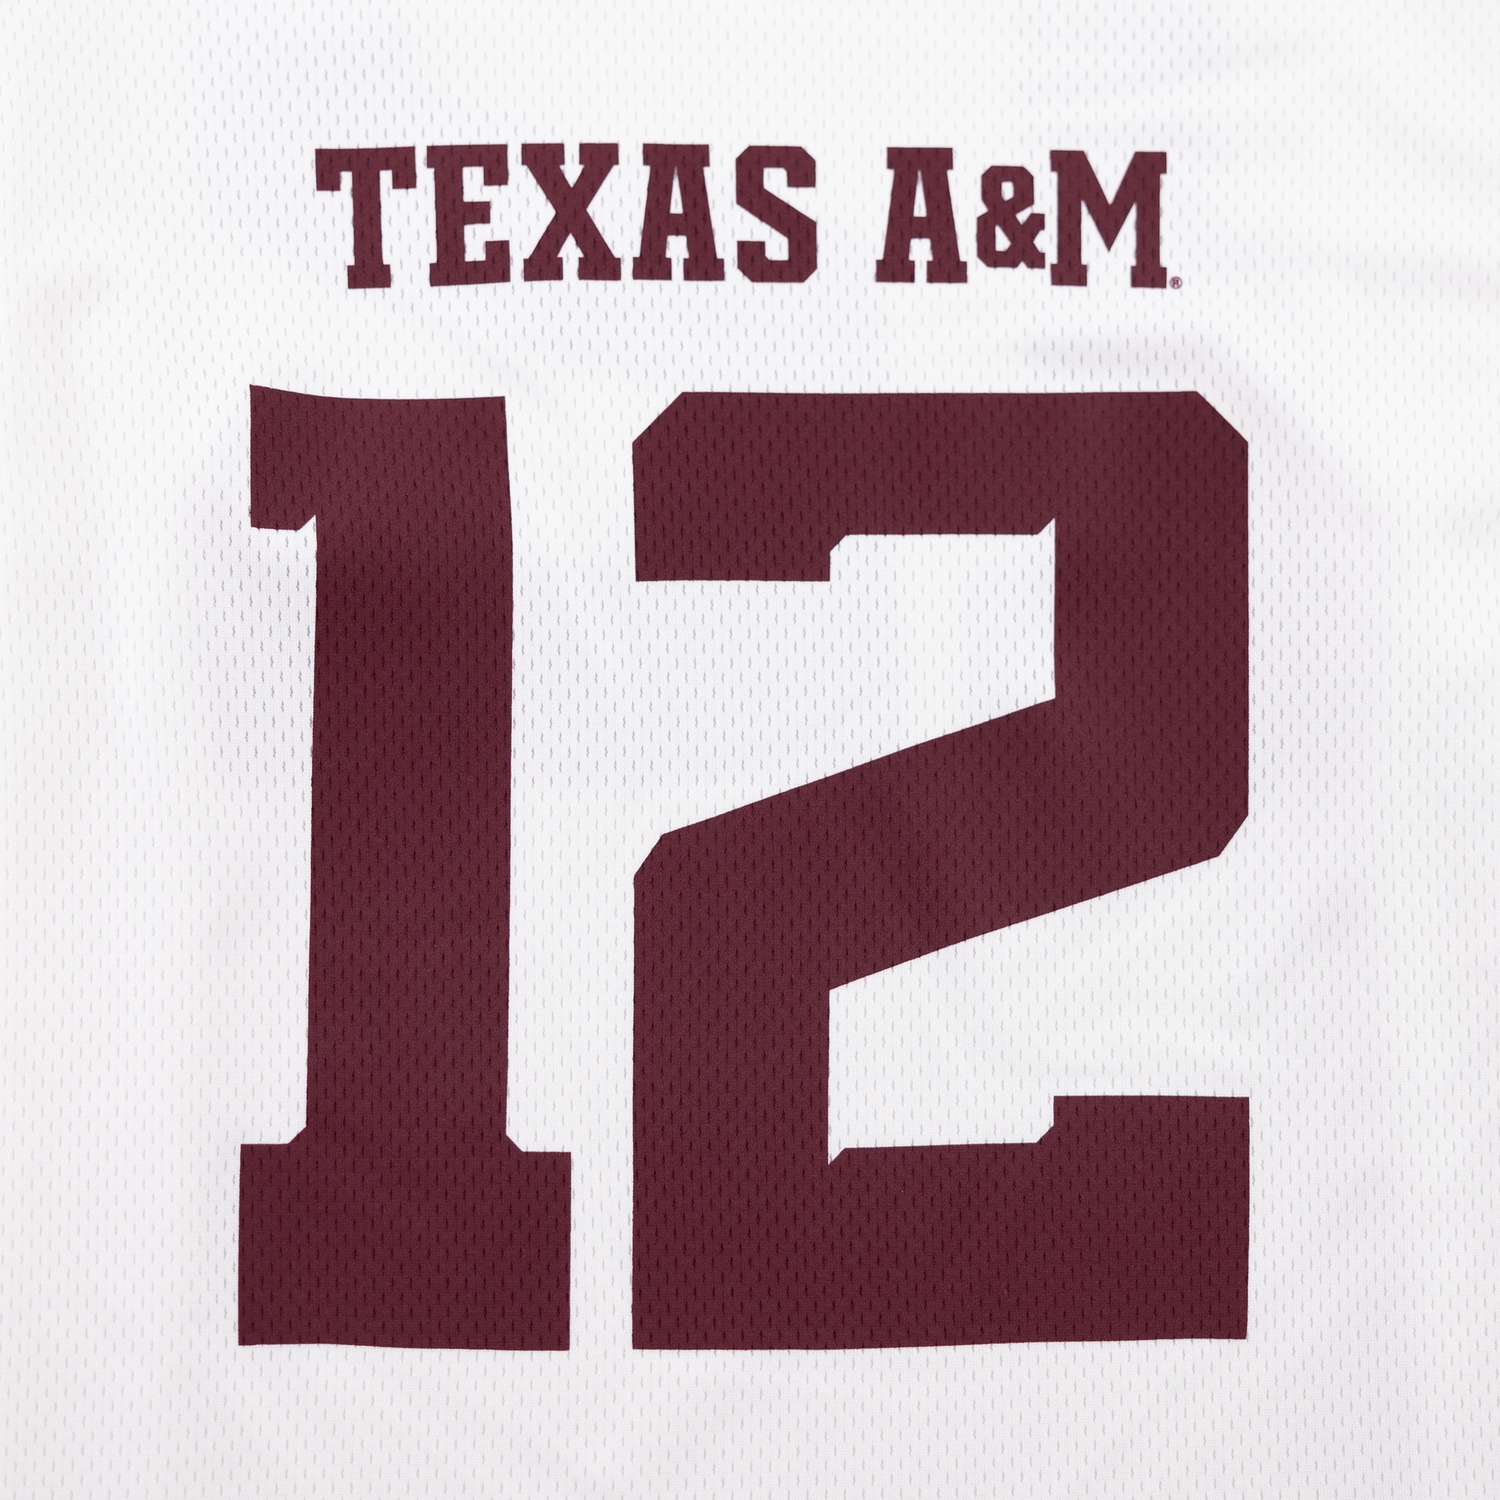 Men's adidas #12 White Texas A&M Aggies Premier Football Jersey